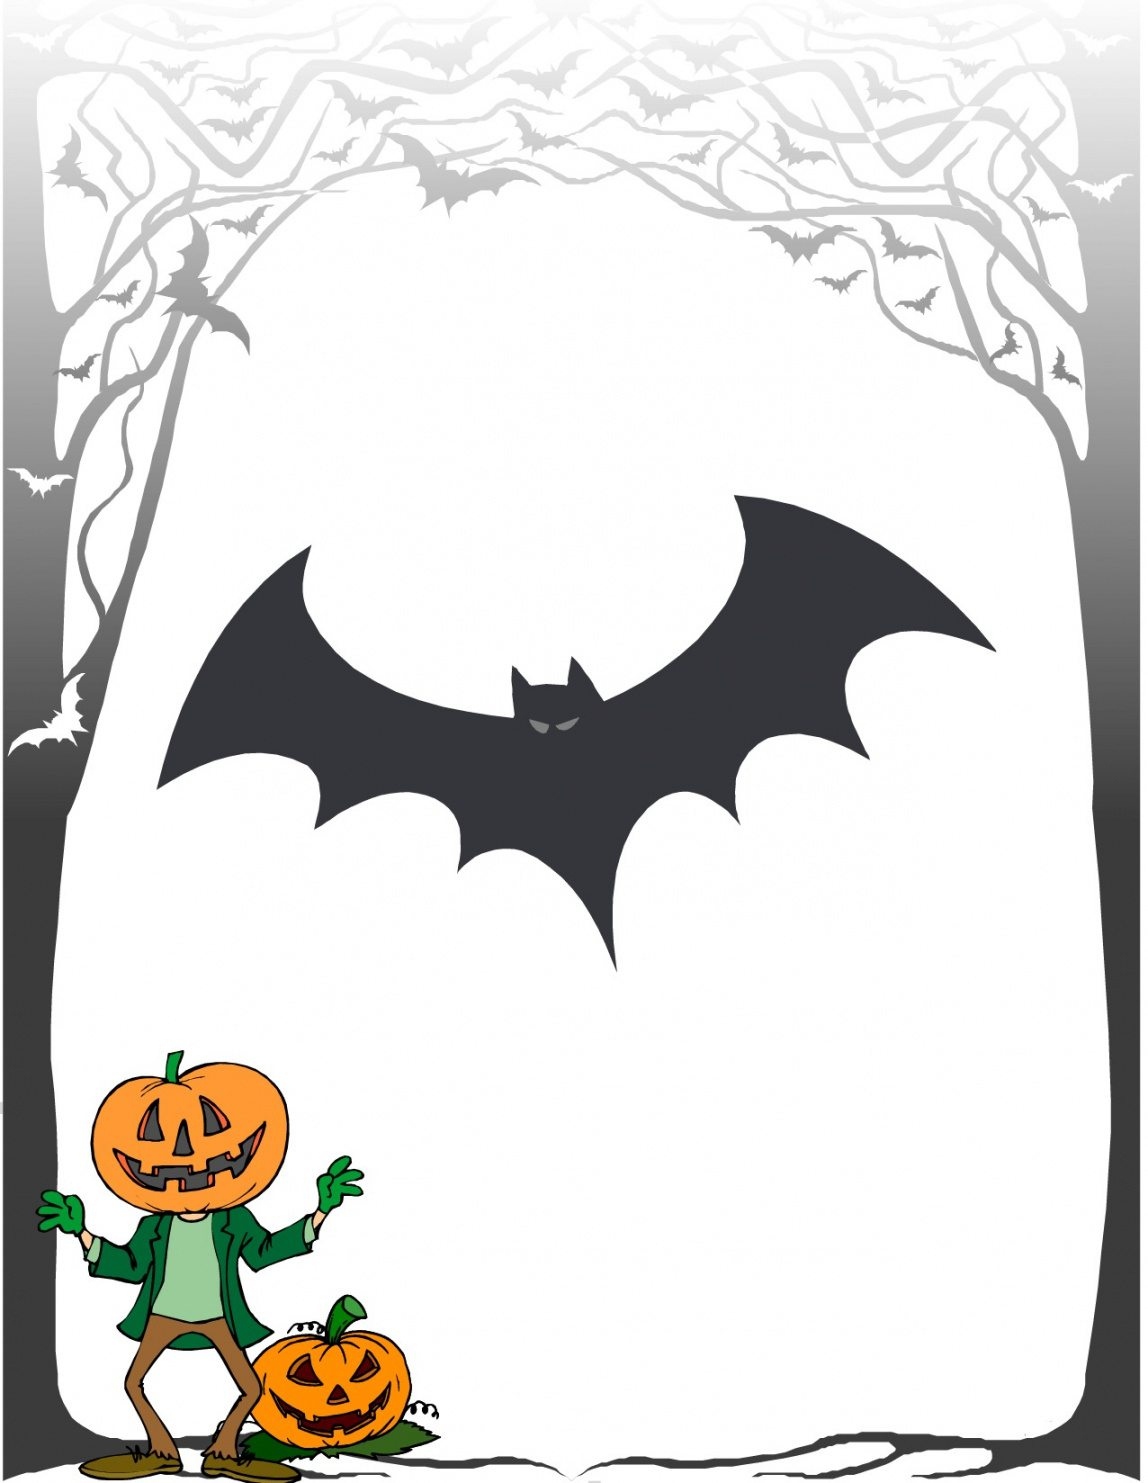 Editable Halloween Award Certificate Maker Costume Contest In Halloween Certificate Template